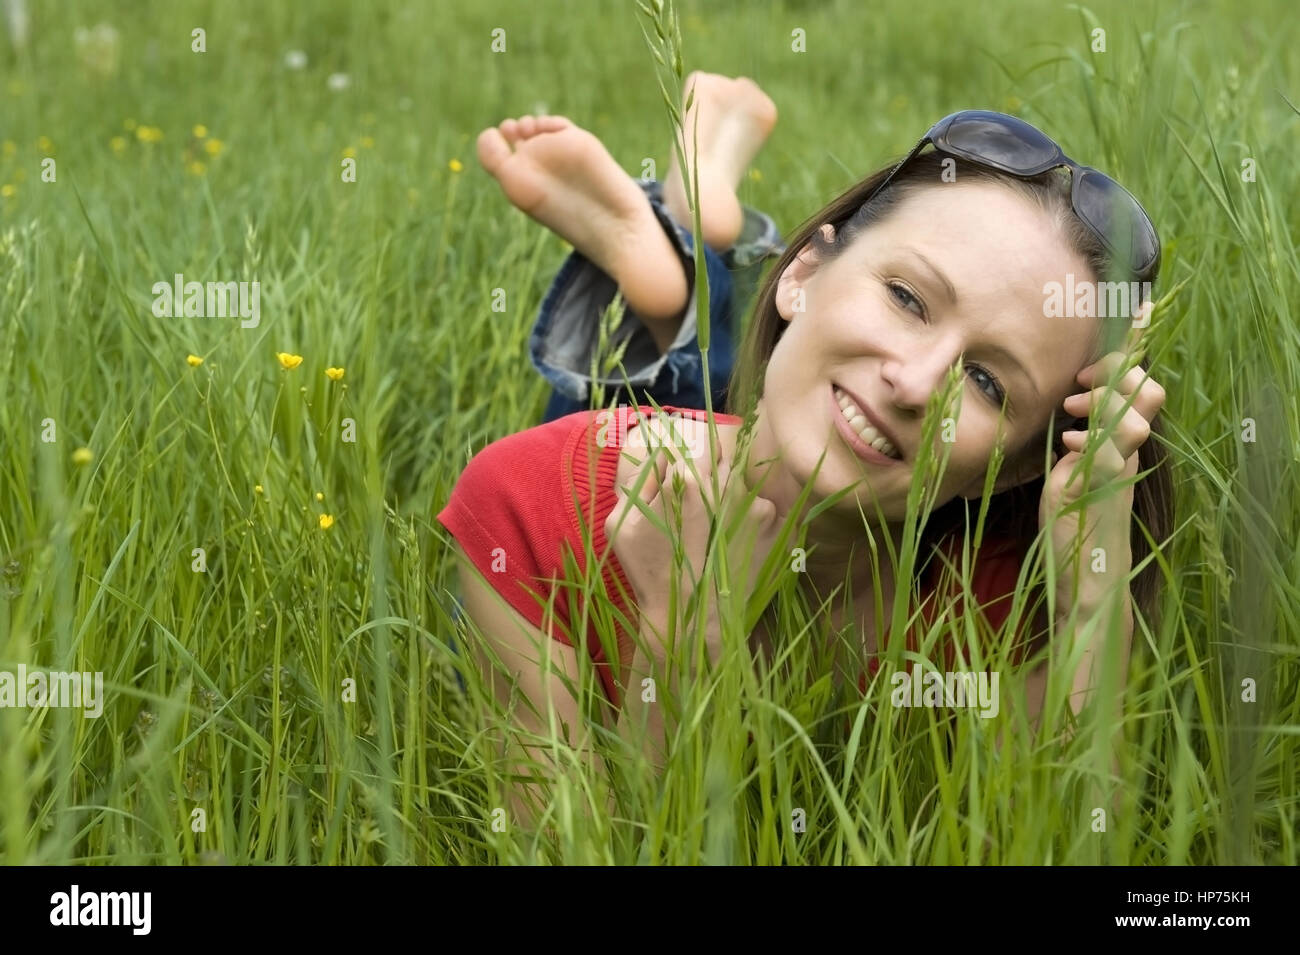 Parution du modèle, Junge Frau, 30, liegt in der entspannt Fruehlingswiese - woman relaxing in spring meadow Banque D'Images